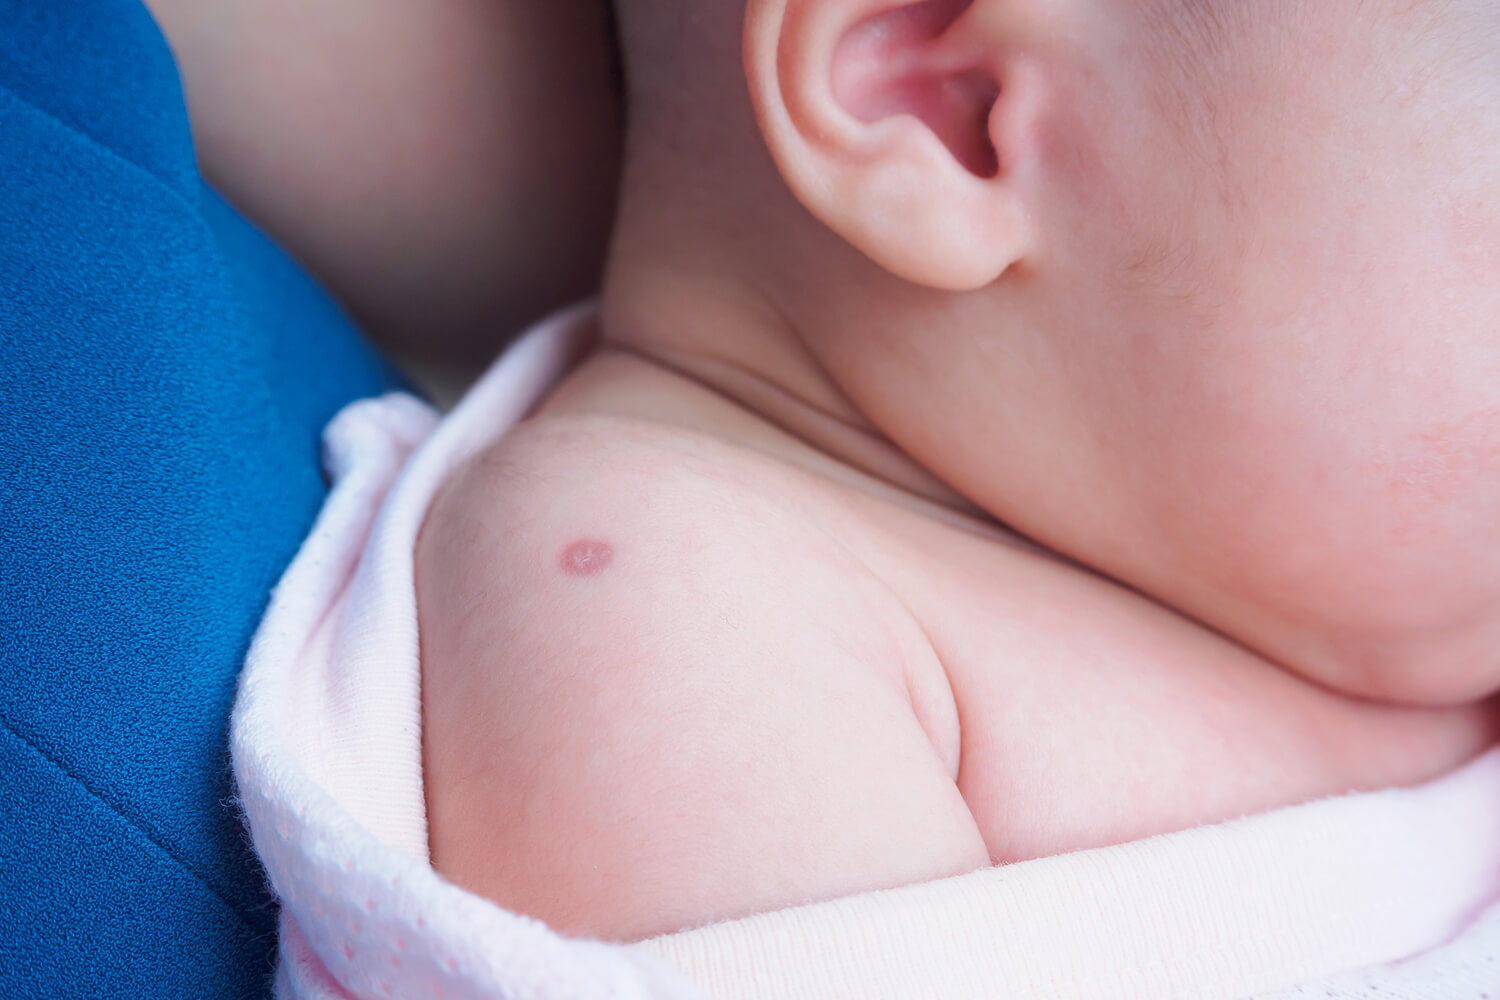 BCG vaccine scar on baby